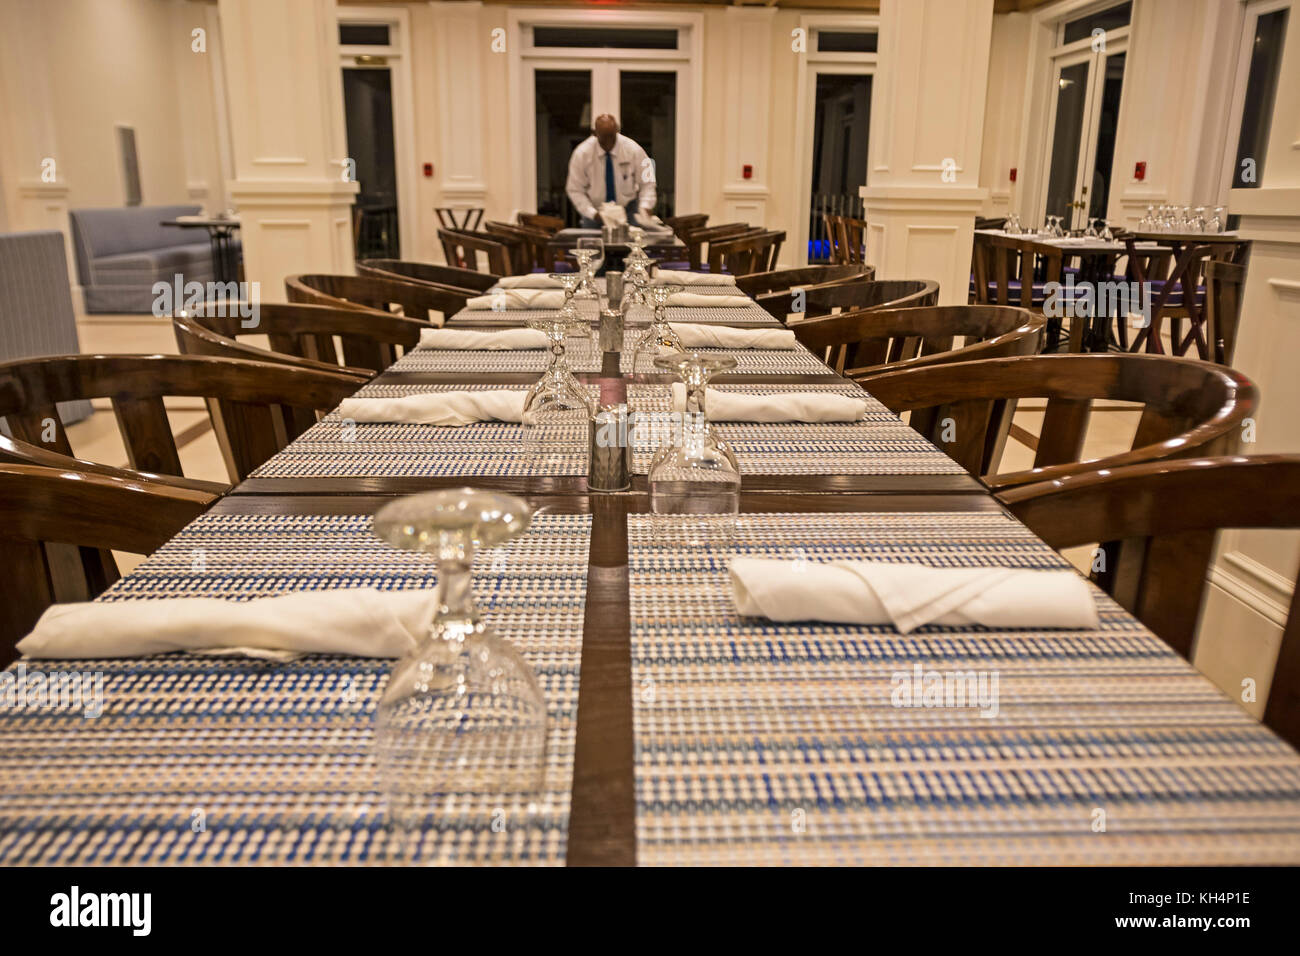 Classic Dining Room at Chub Cay Resort Club House Stock Photo